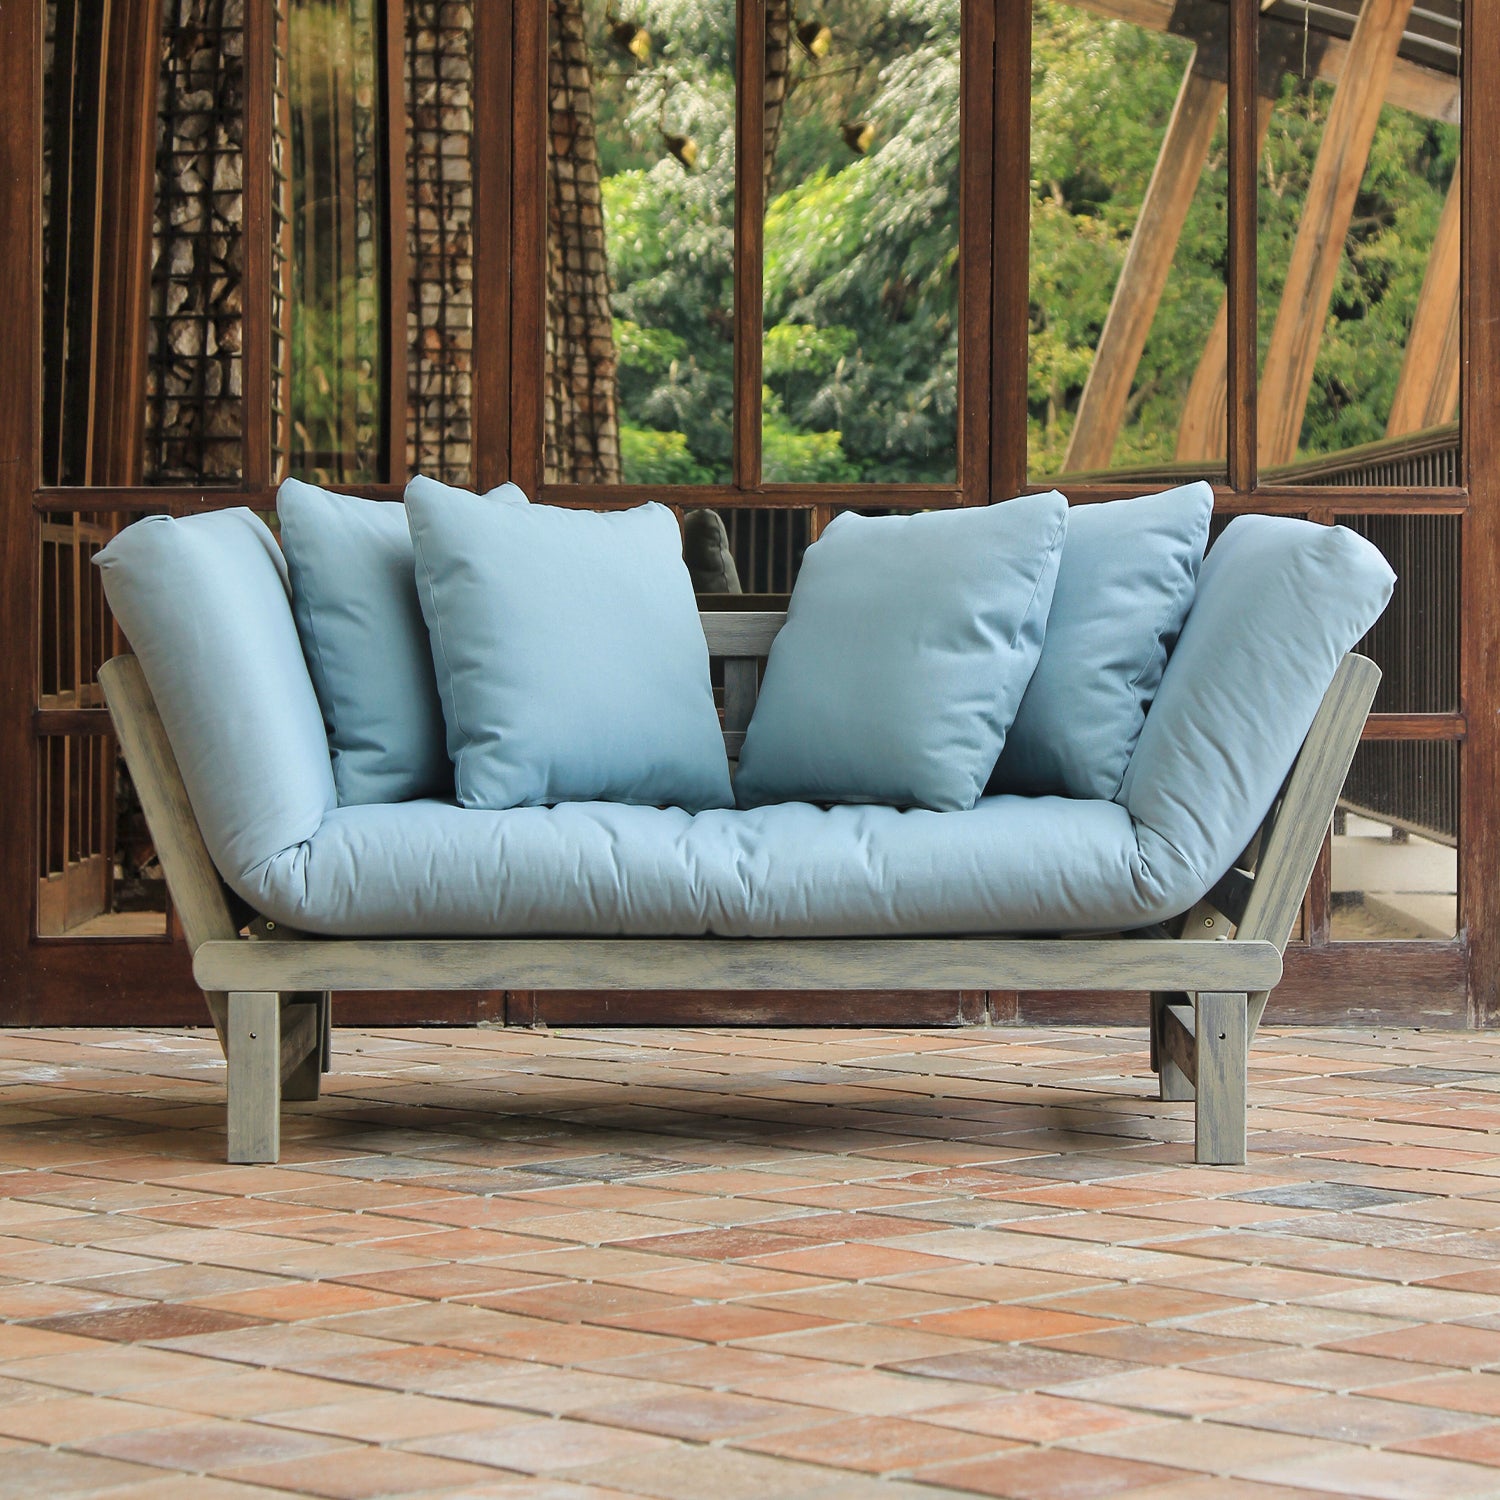 Carlota Mahogany Wood Outdoor Convertible Sofa Daybed - Weathered Gray Wood / Blue Spruce Cushion - Cambridge Casual